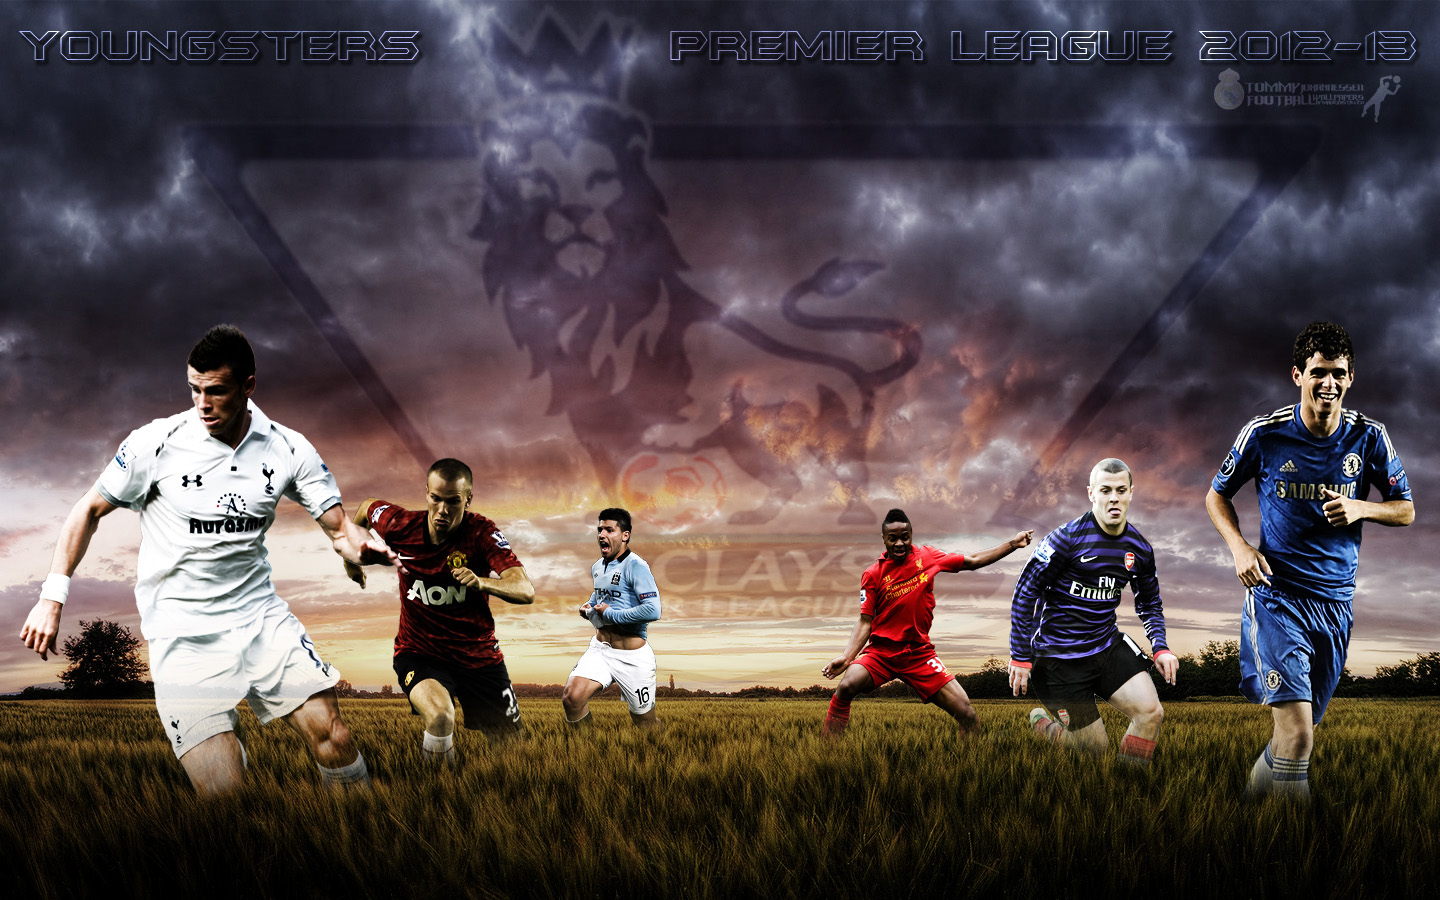 Premier League Football Background - HD Wallpaper 